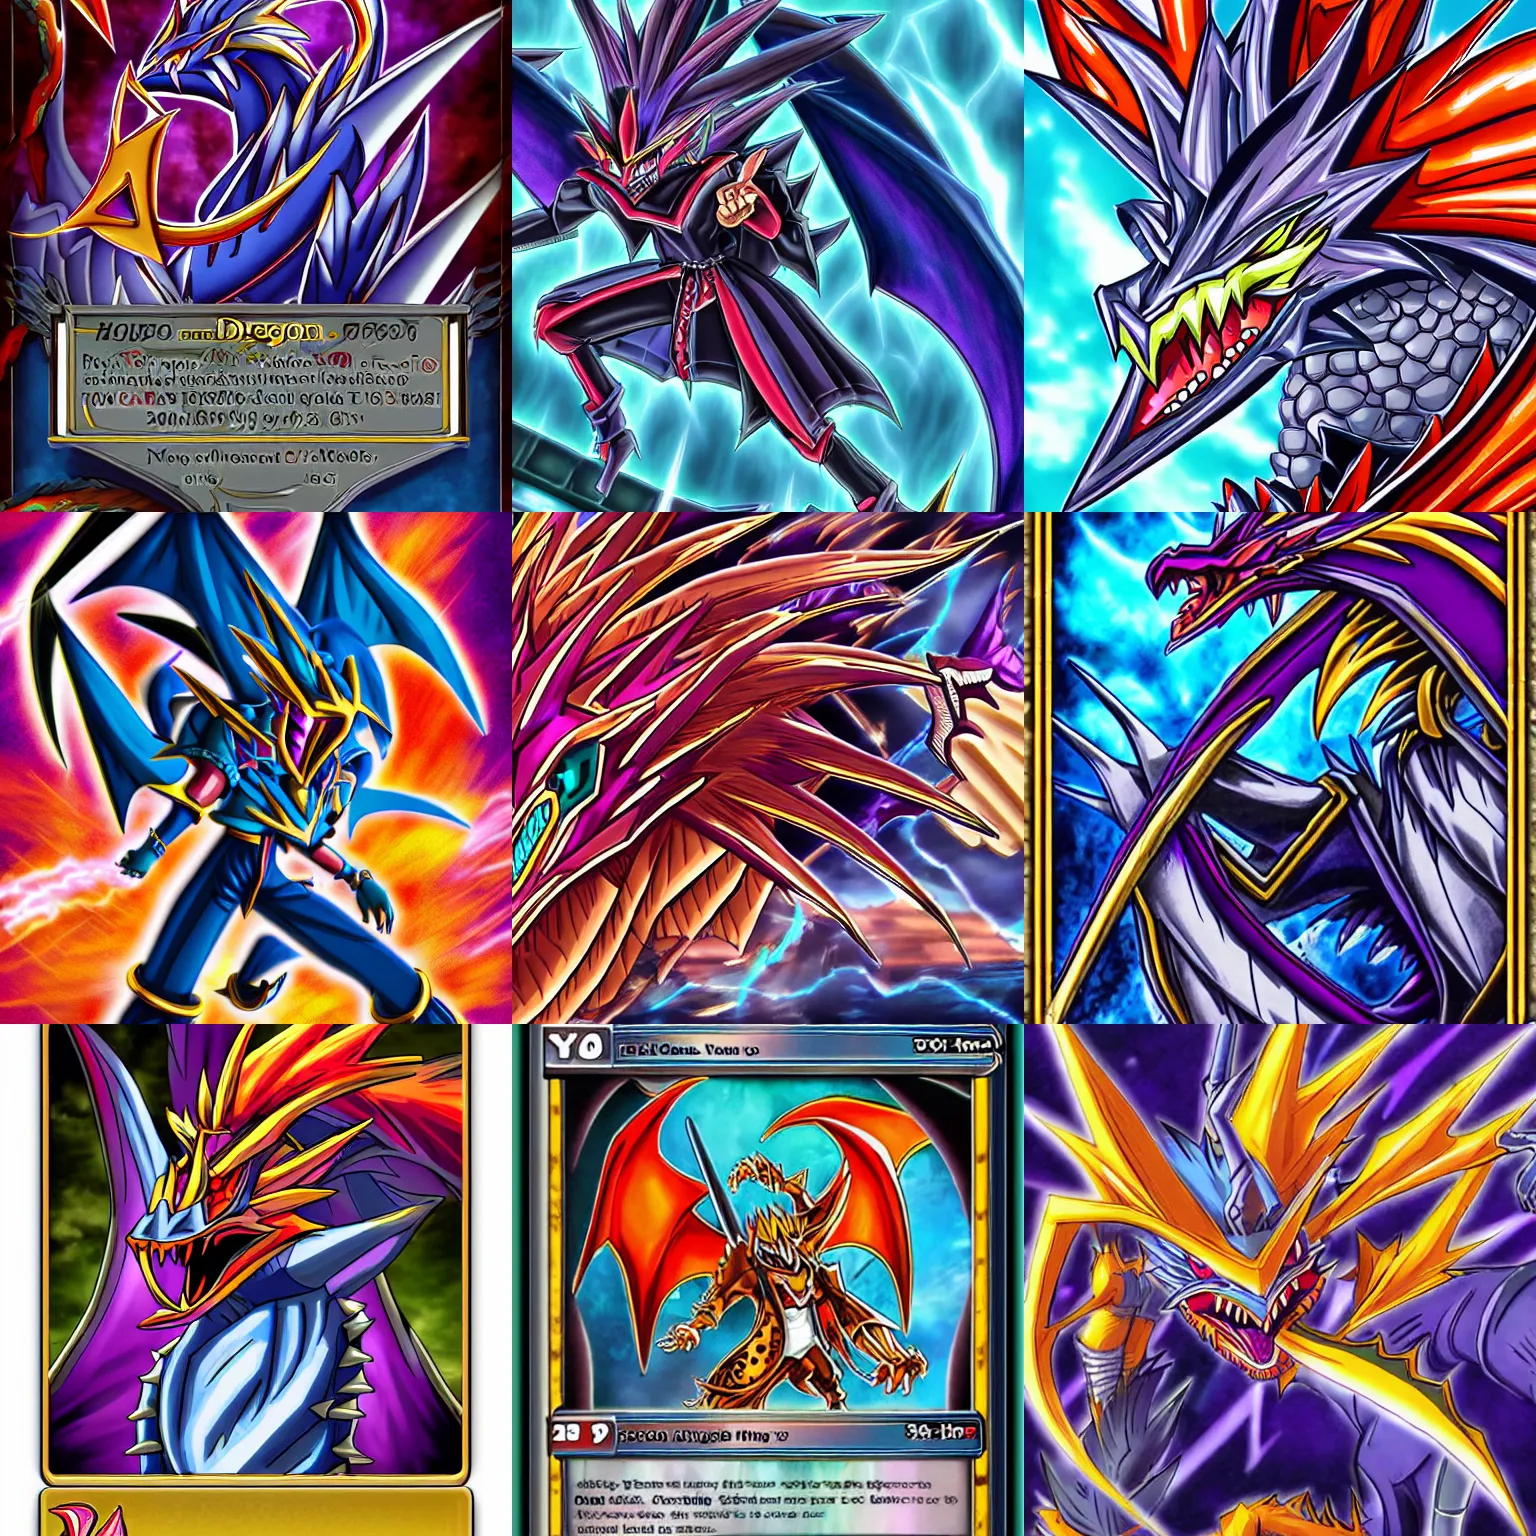 Prompt: yugioh card, dragon, detailed high resolution illustration